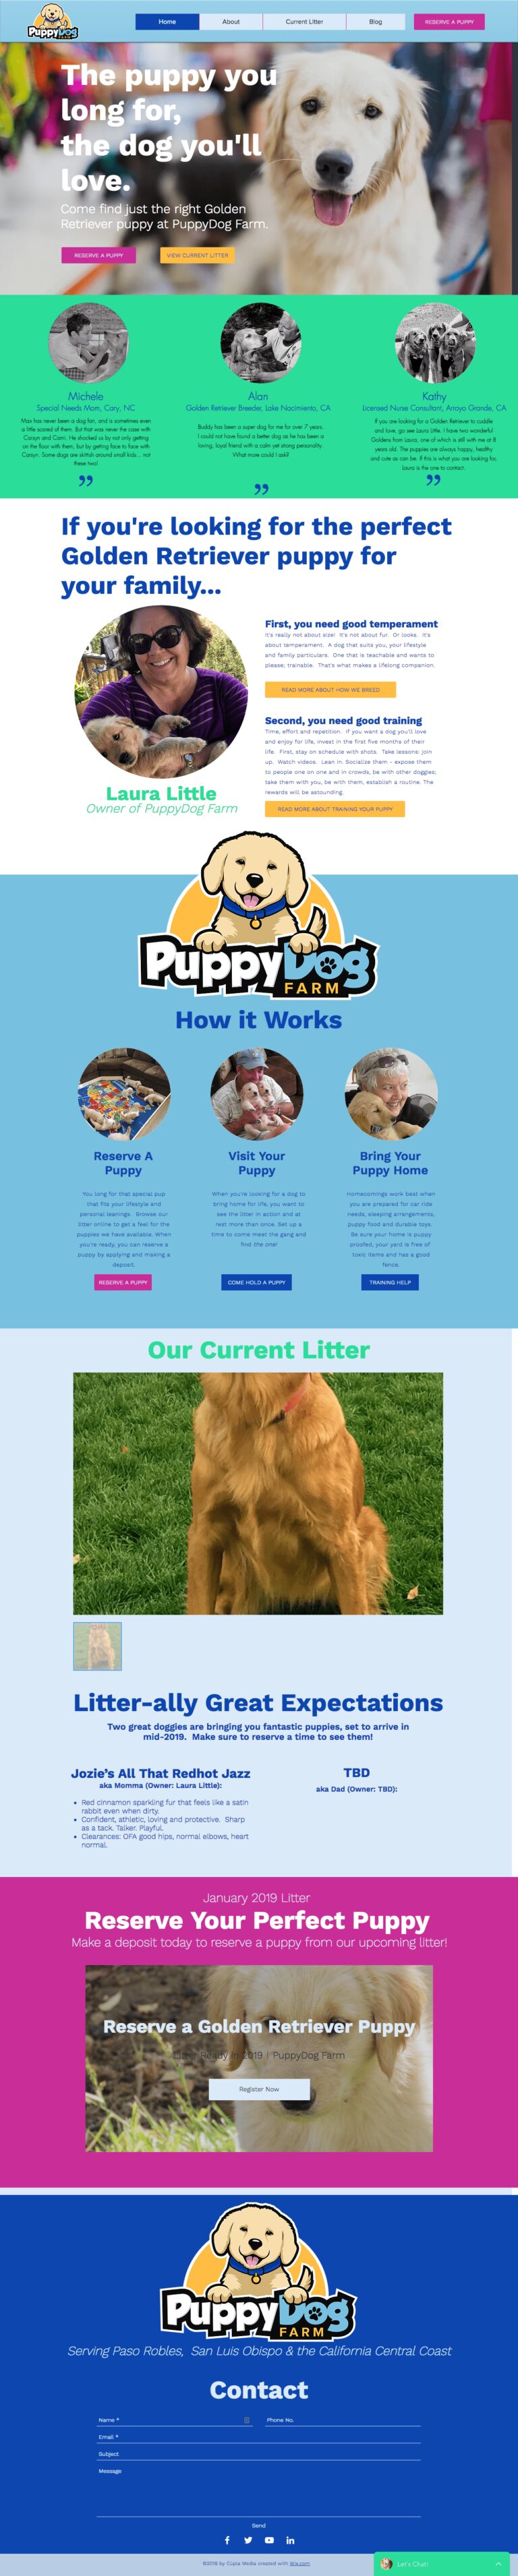 Puppy Dog Farm Website Design | Wix Website Designer